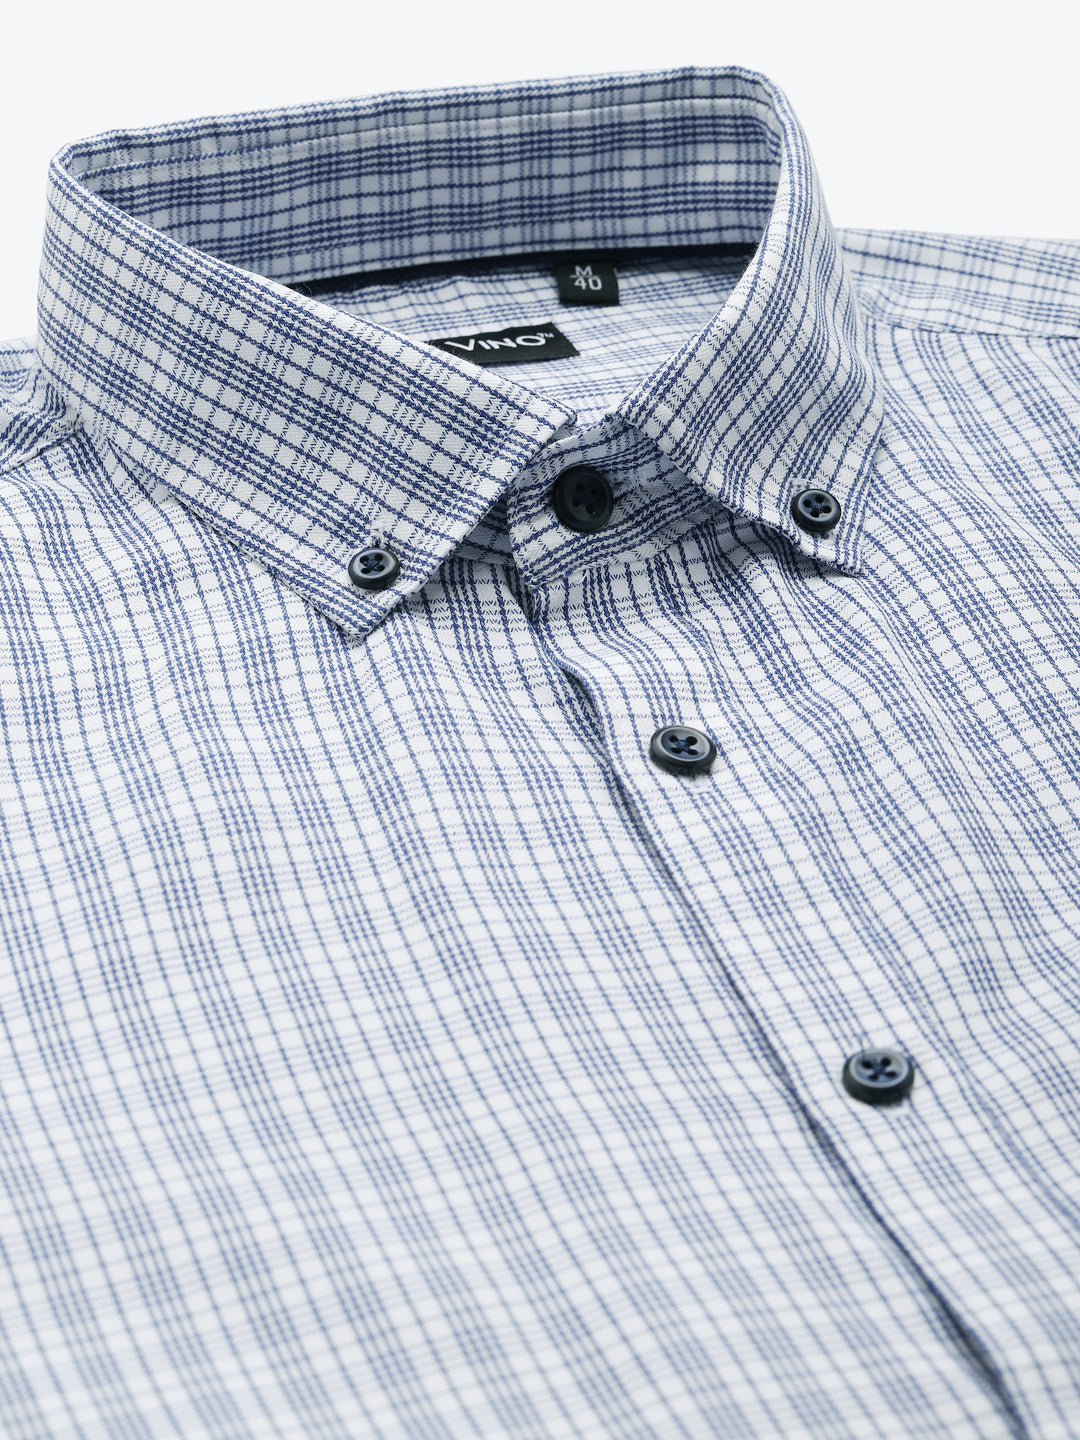 Men's Blue Checks Formal Shirt by Don Vino